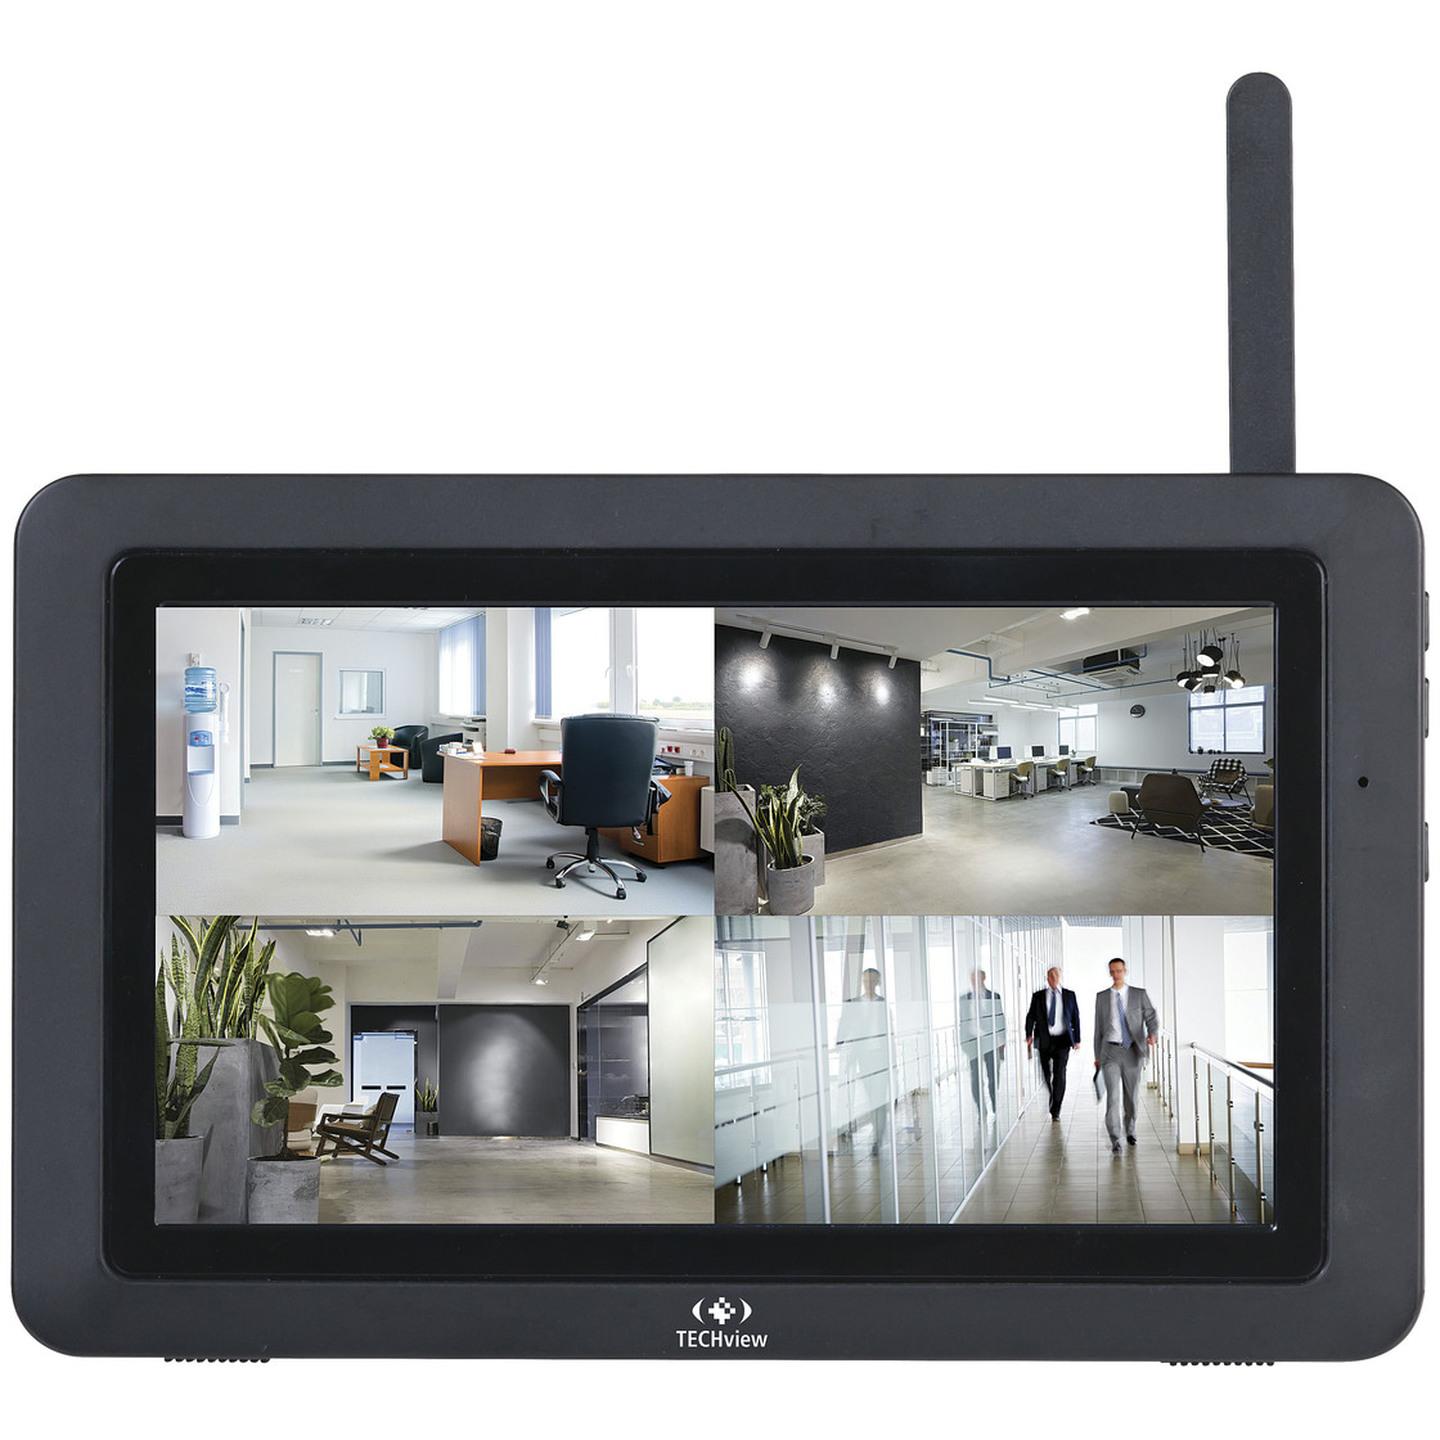 Wireless 7in LCD DVR Surveillance Kit